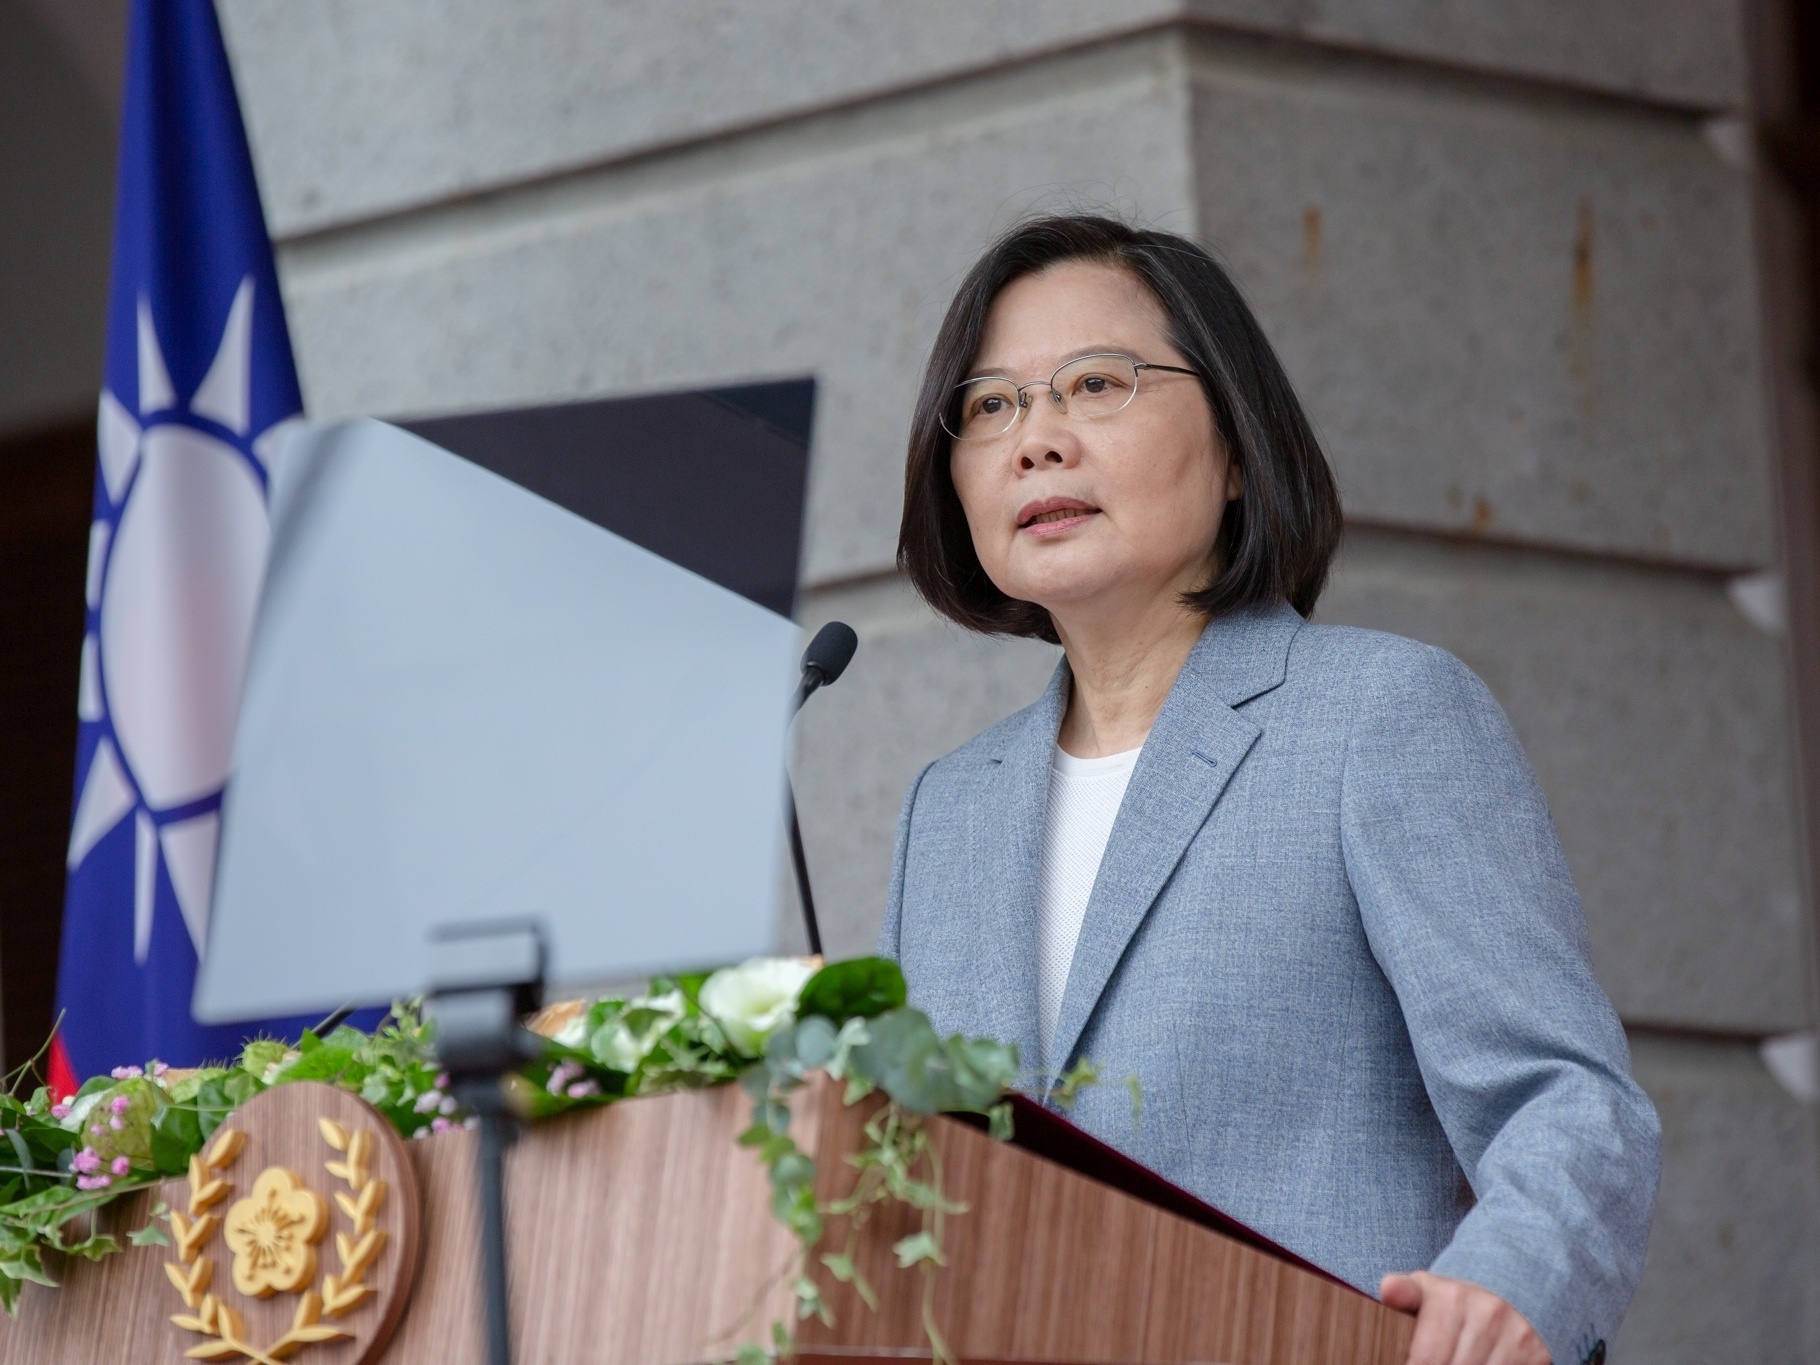 Ásia: Presidente de Taiwan avisa Pequim no Dia Nacional